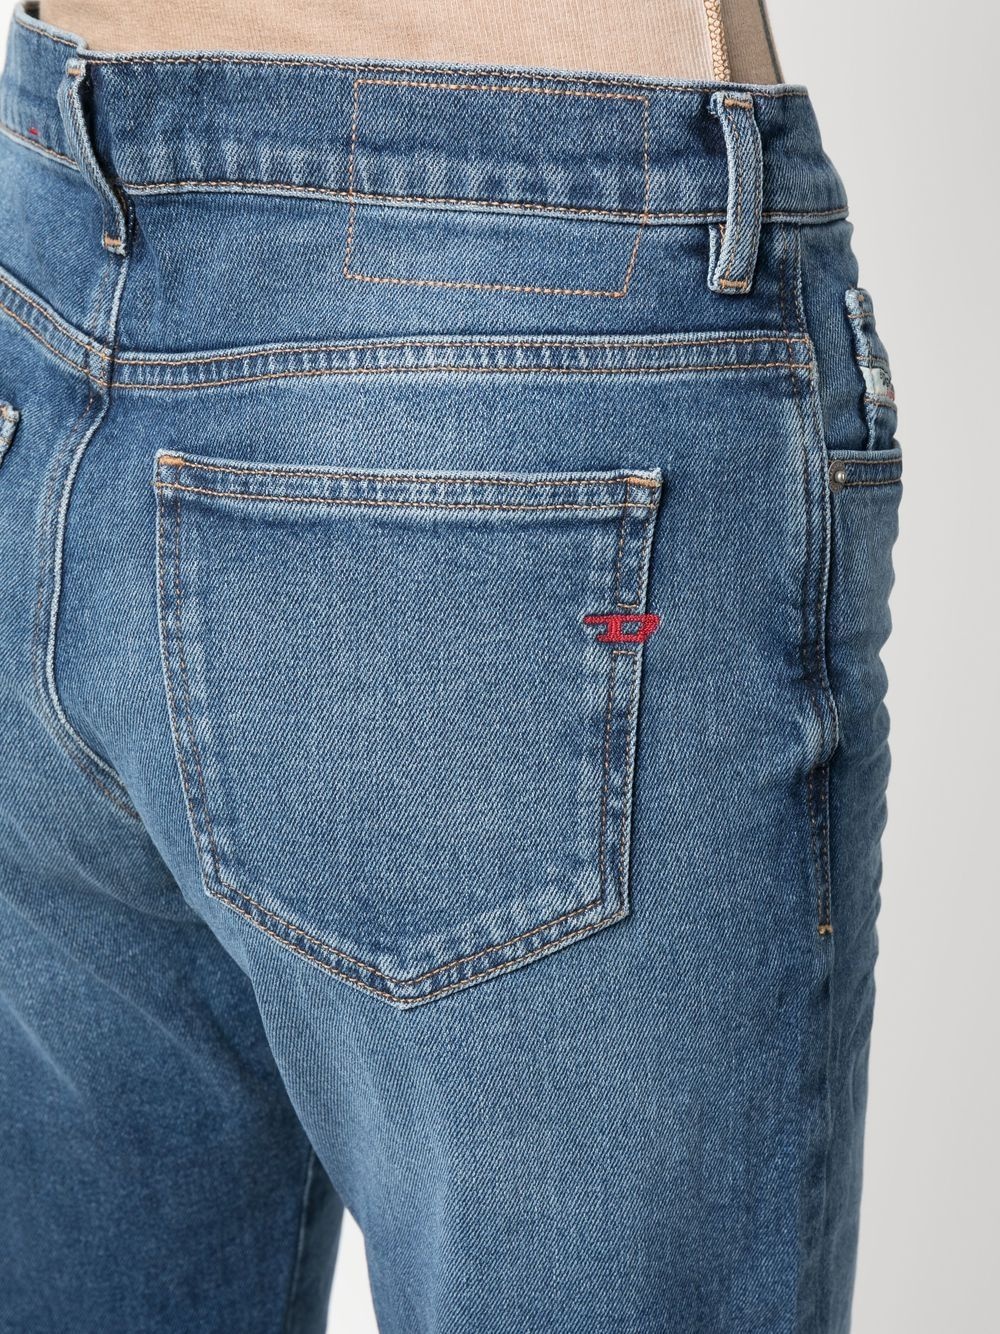 cropped denim jeans - 5